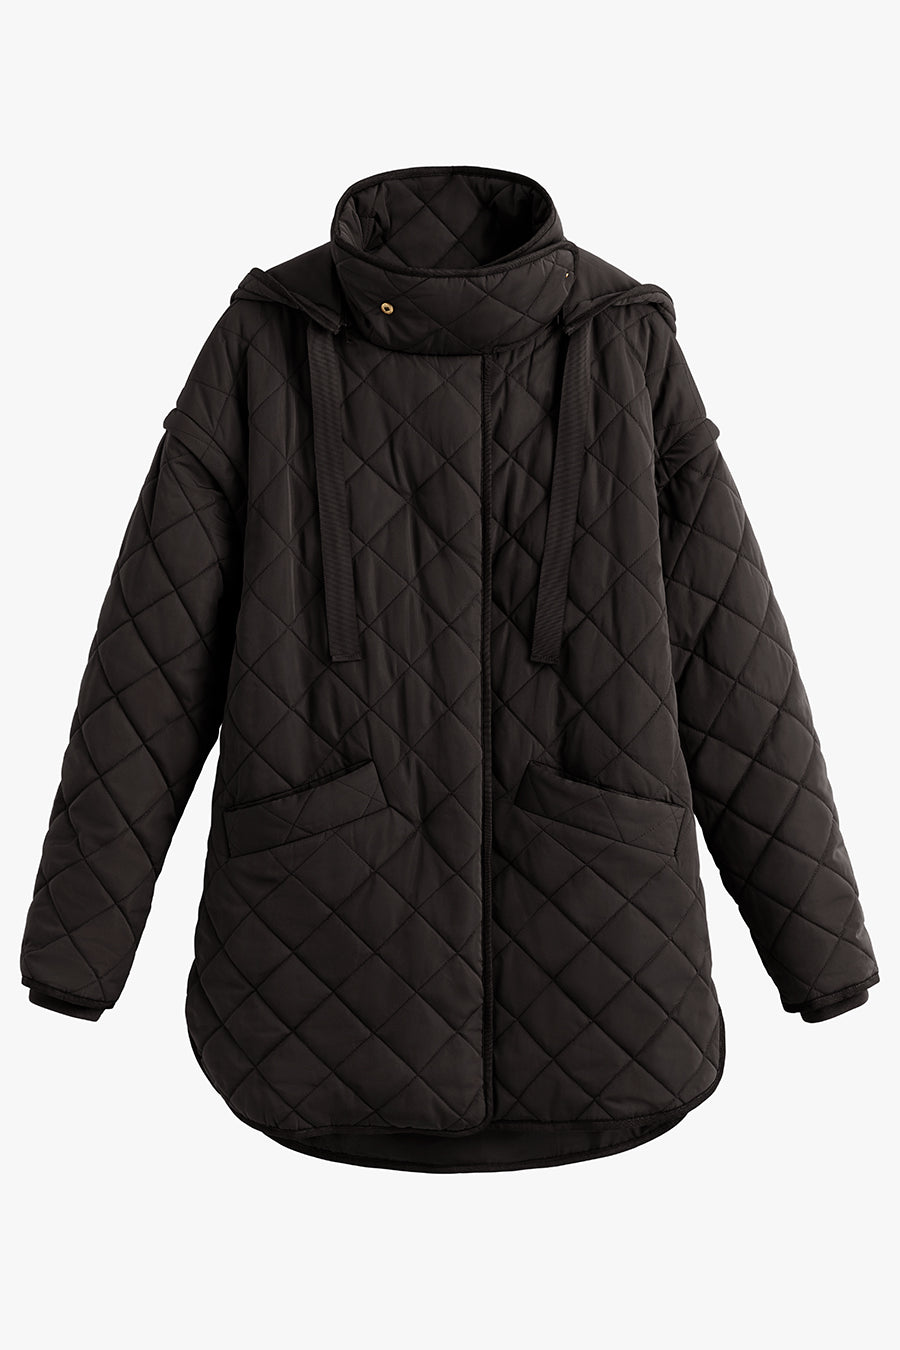 Cuyana - Holiday 2021 - Wool Cashmere Short Wrap Coat